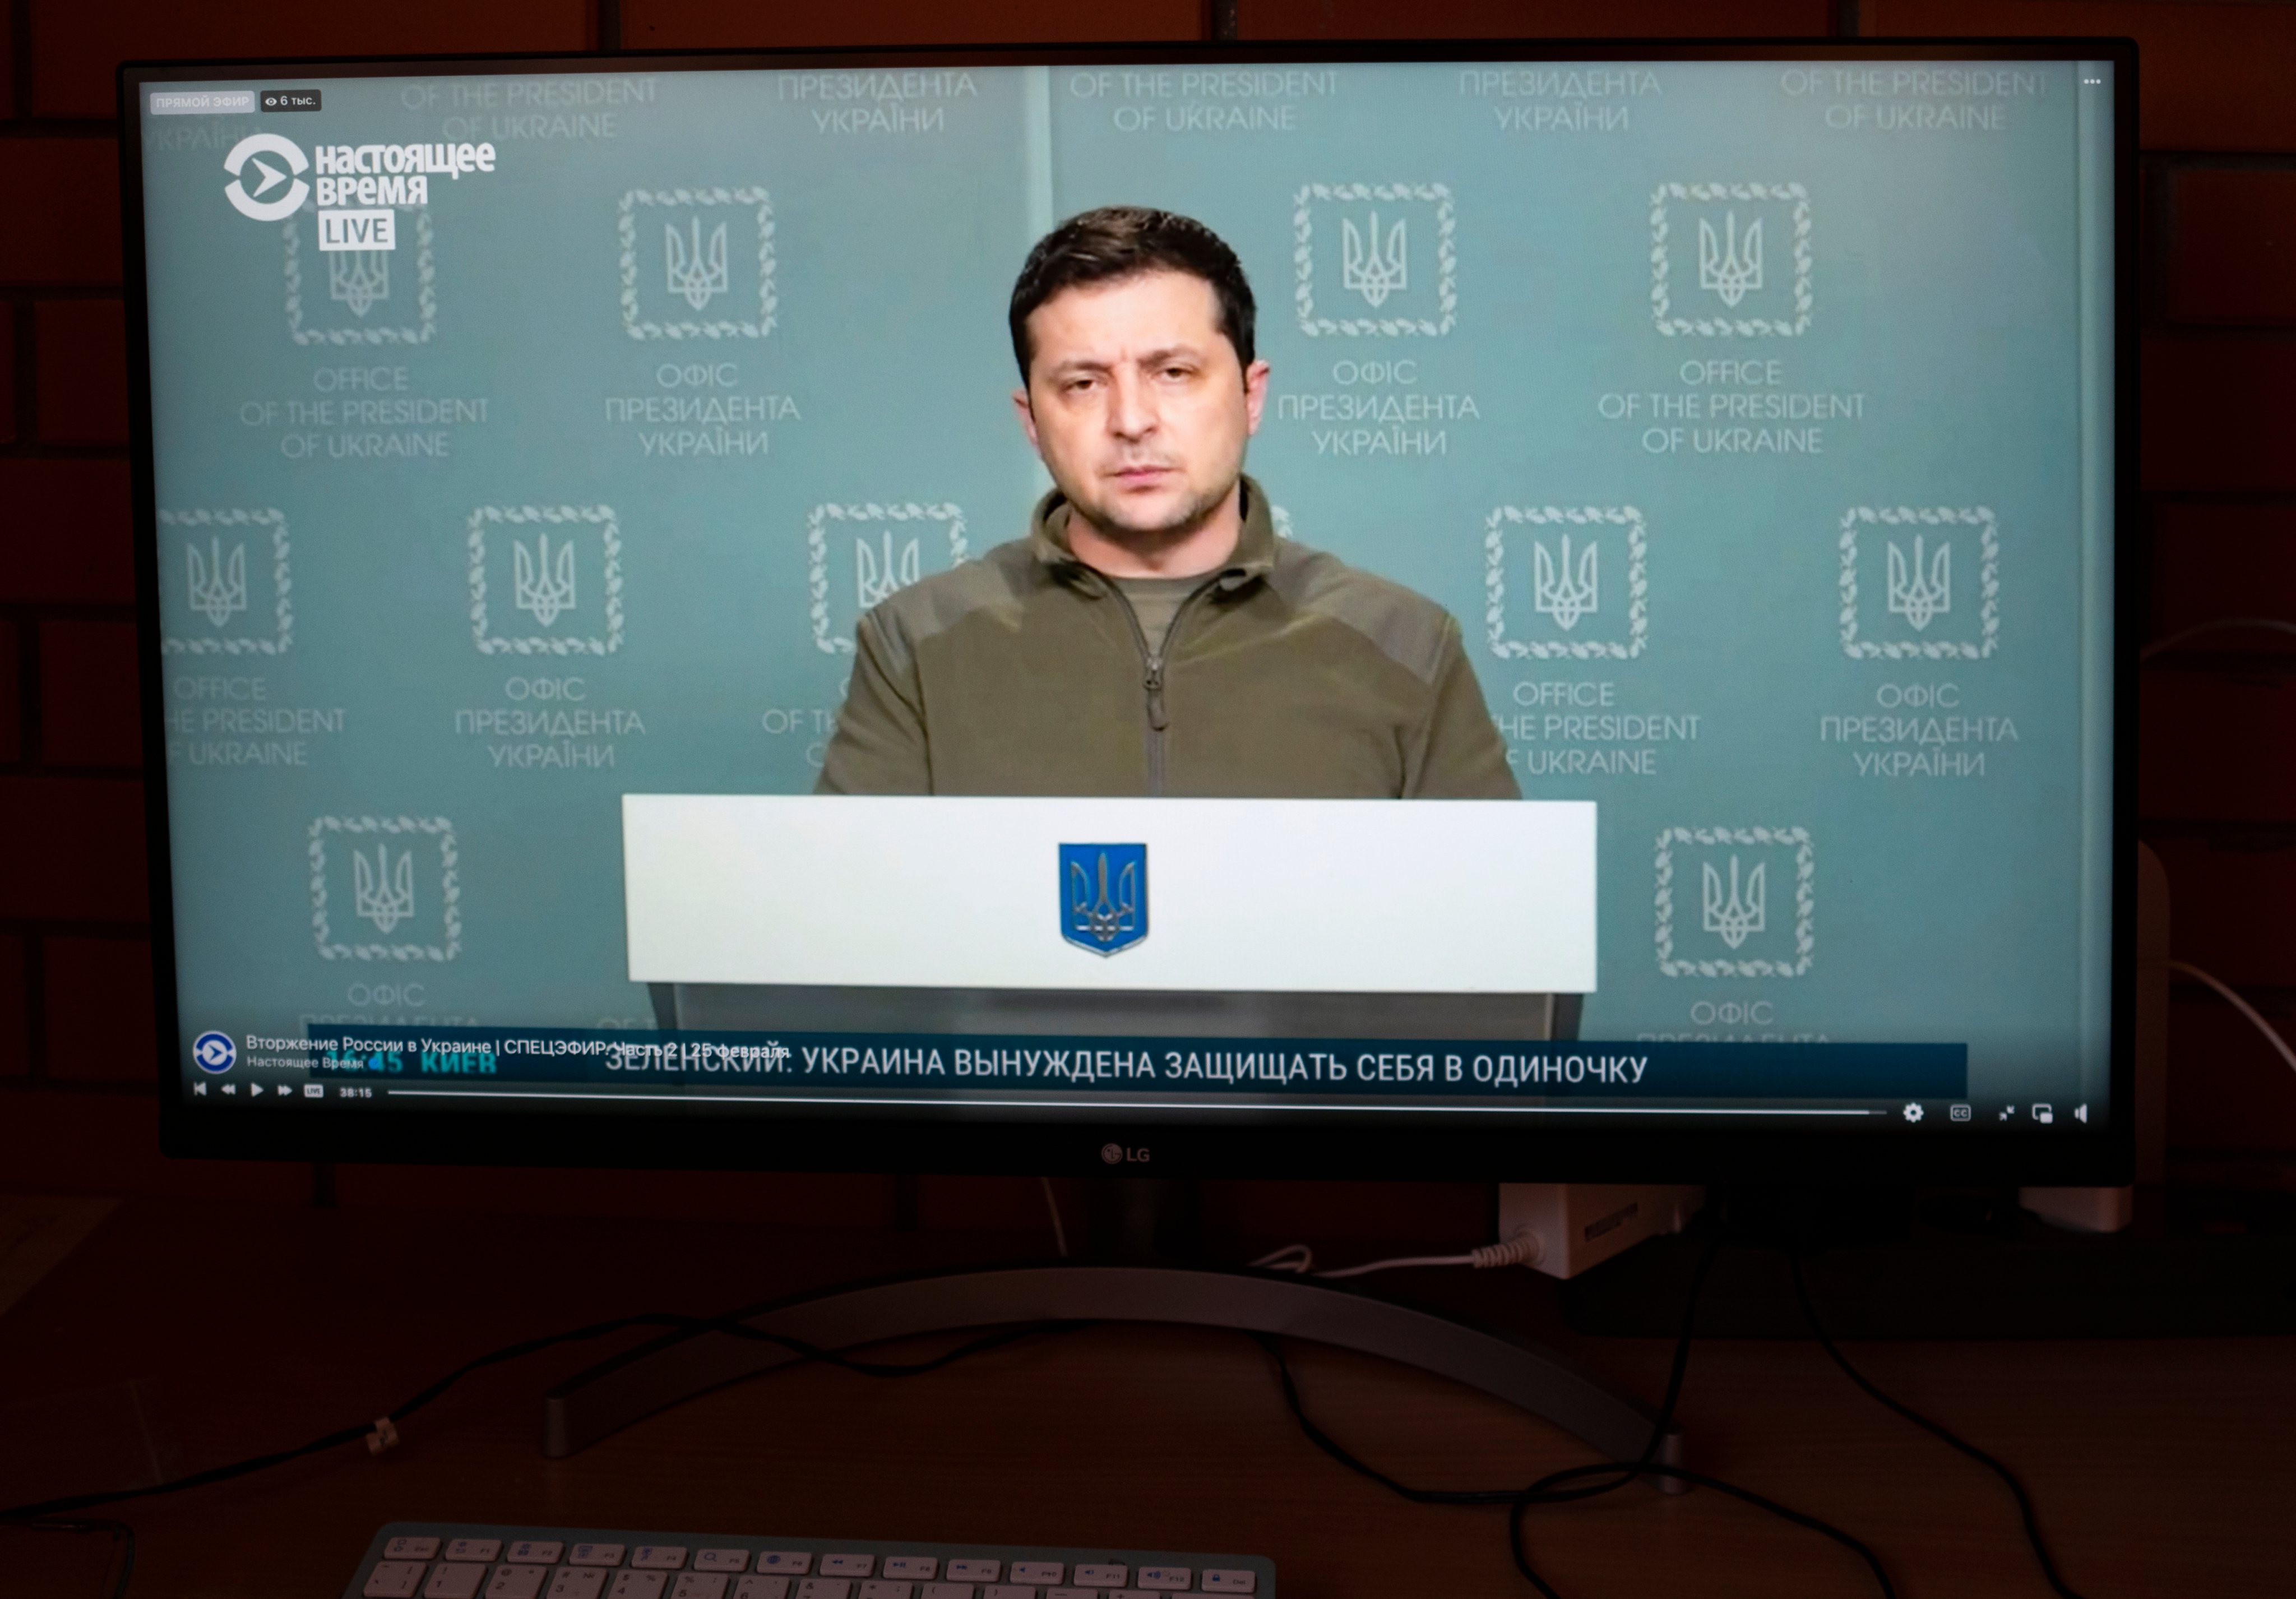 President Volodymyr Zelensky, in his video address, demanded